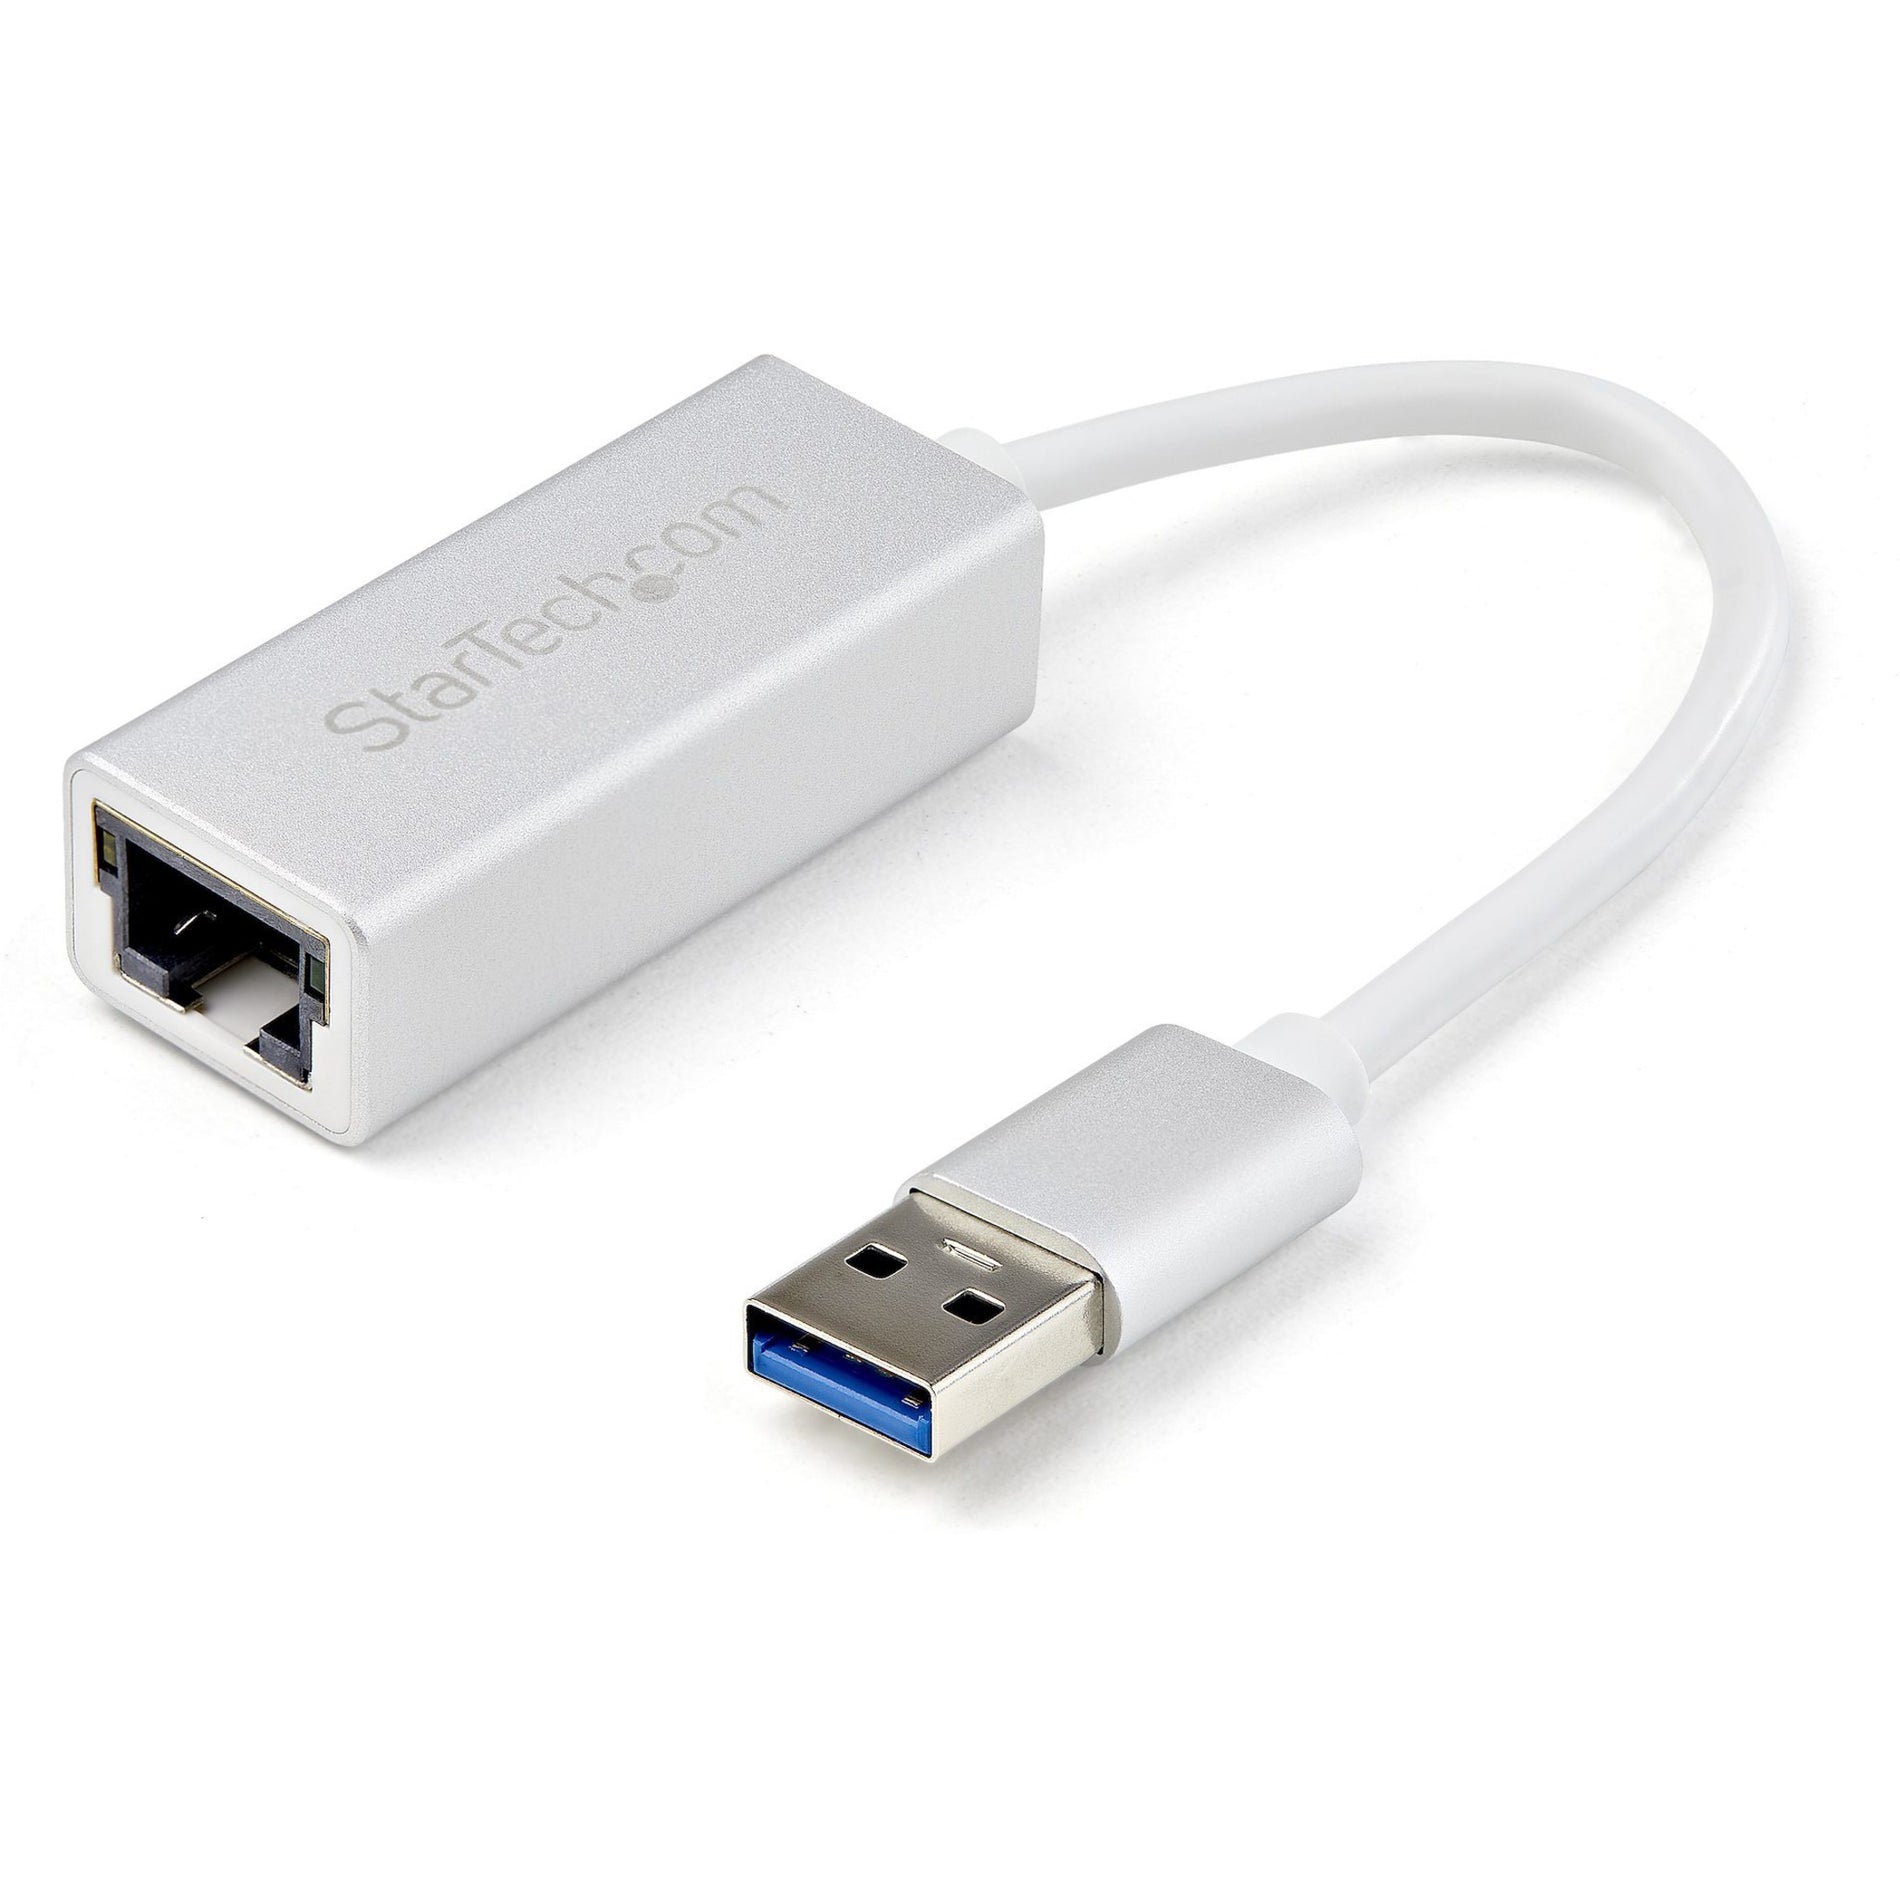 StarTech.com USB31000SA USB 3.0 to Gigabit Network Adapter - Silver, Sleek Aluminum Design Ideal for MacBook, Chromebook or Tablet